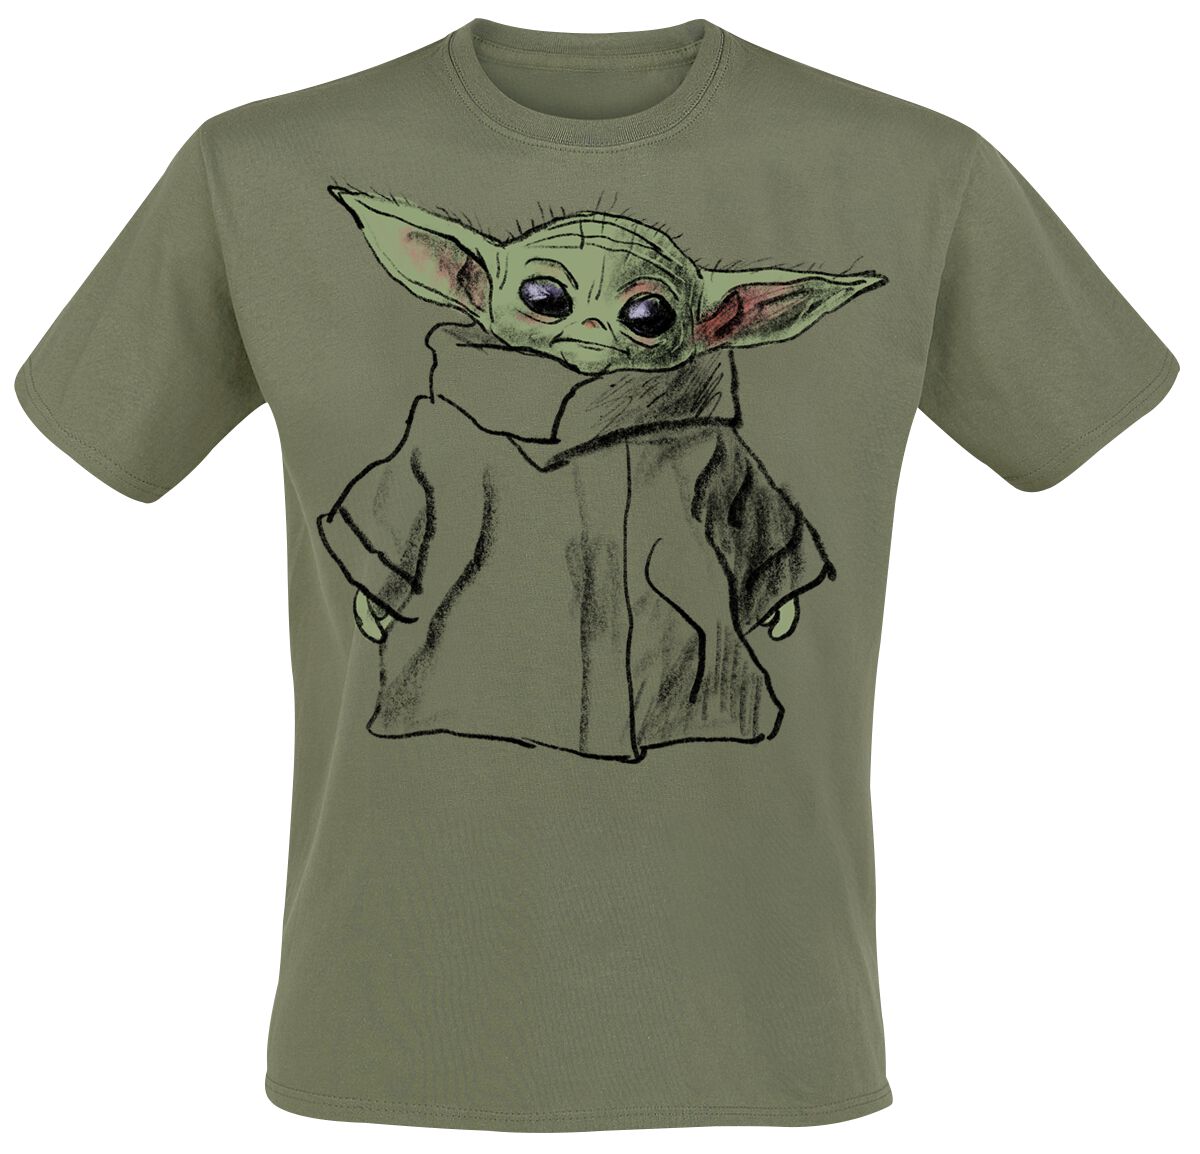 Star Wars The Mandalorian - Grogu - Sketch T-Shirt grün in XL